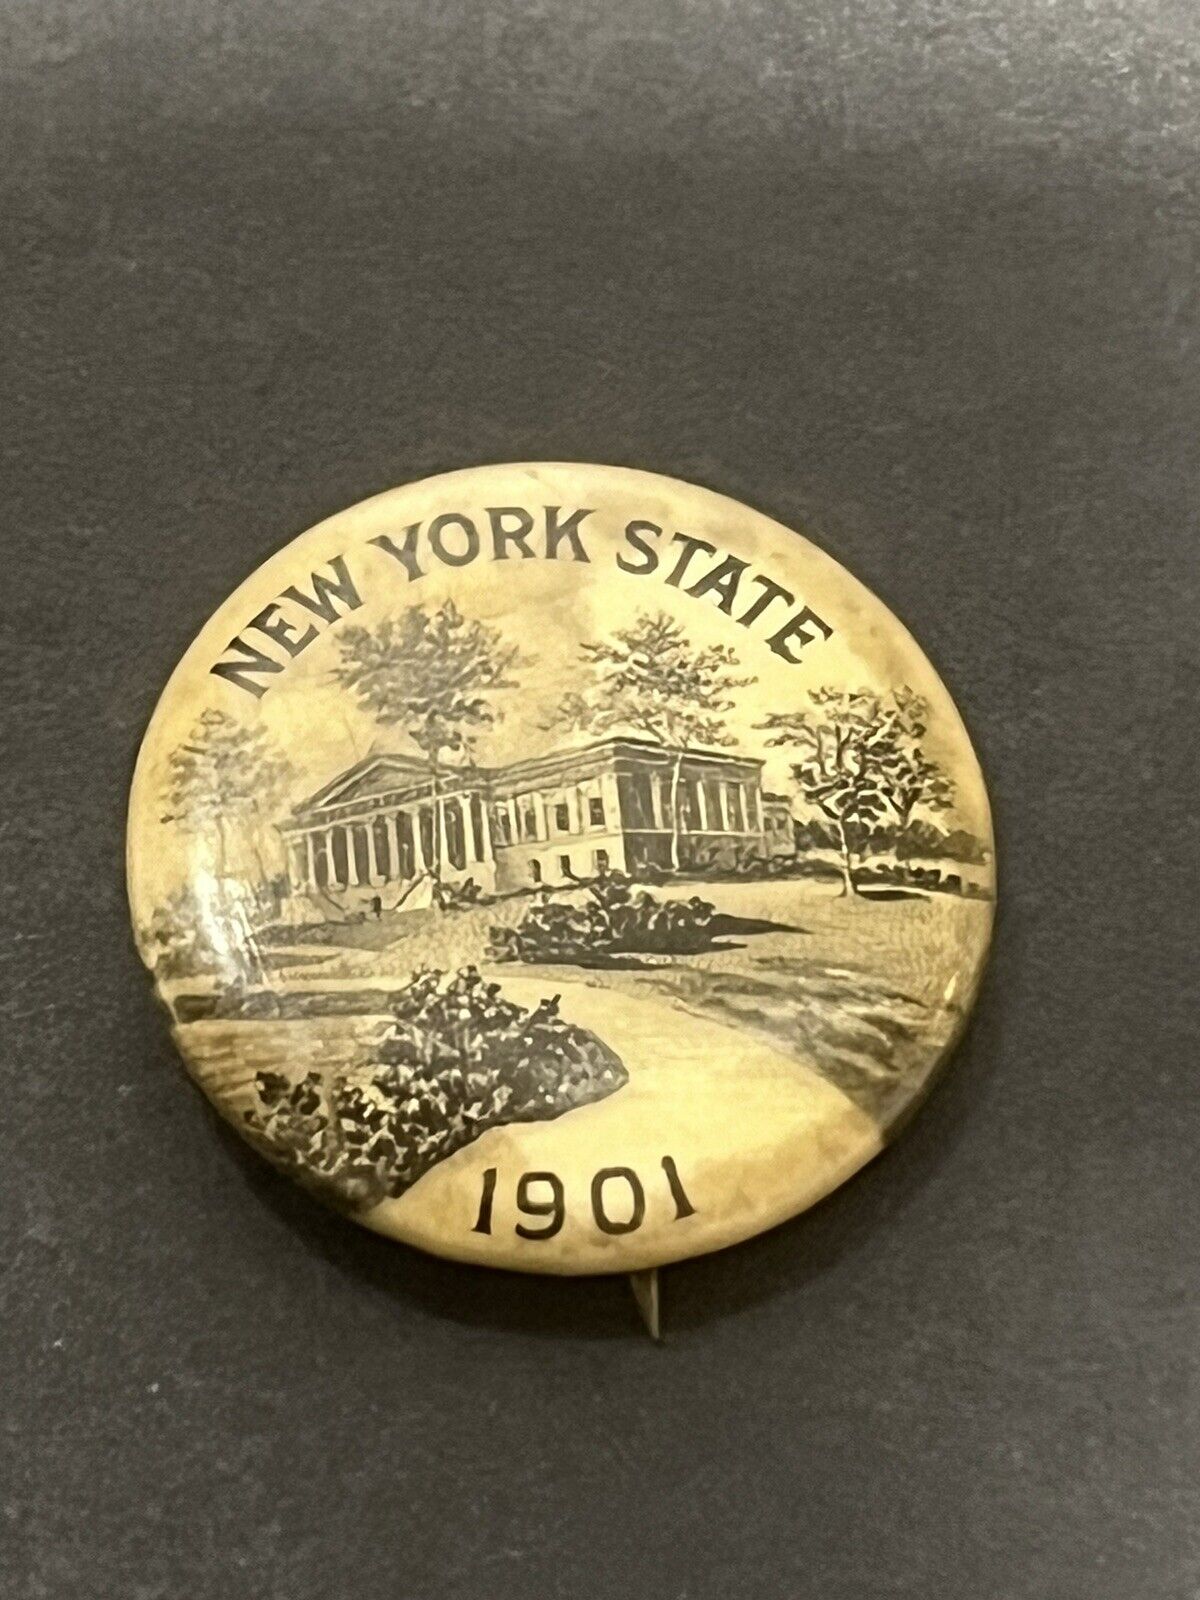 1901 New York State Badge Button Pin Pinback Whitehead + Hoag Vtg Antique Scarce